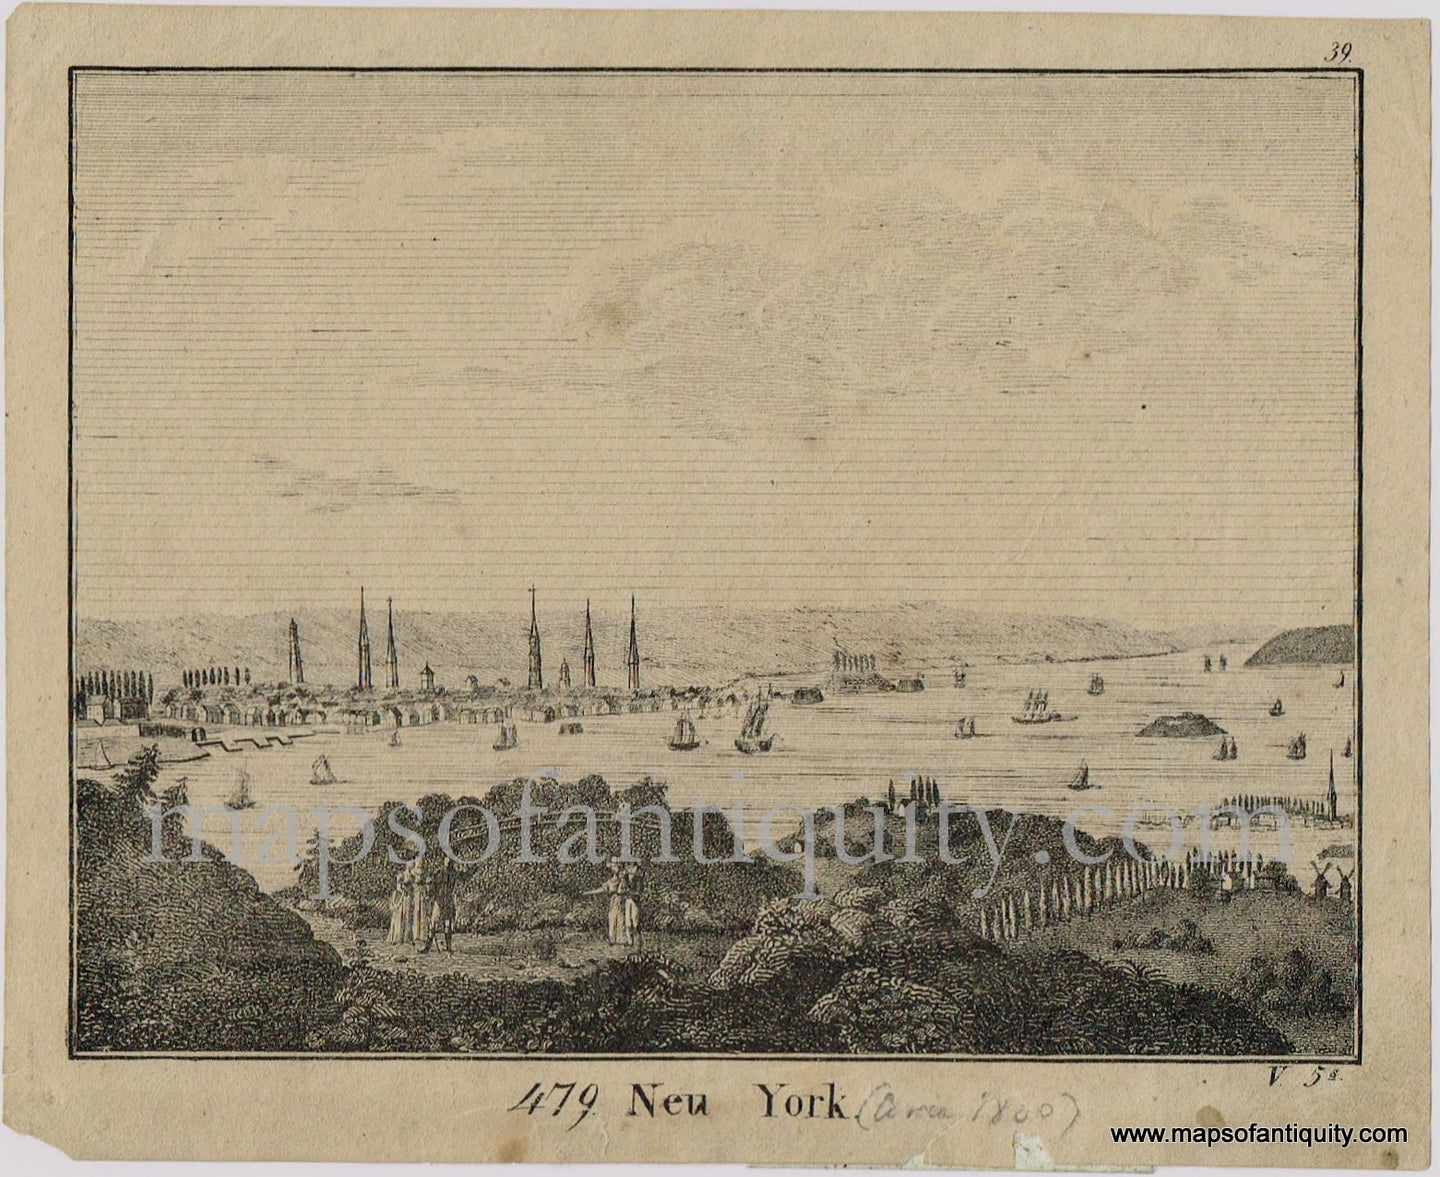 Antique-Black-and-White-Print-Neu-York-c.-1800-Unknown-New-York-New-York-City-1700s-18th-century-Maps-of-Antiquity